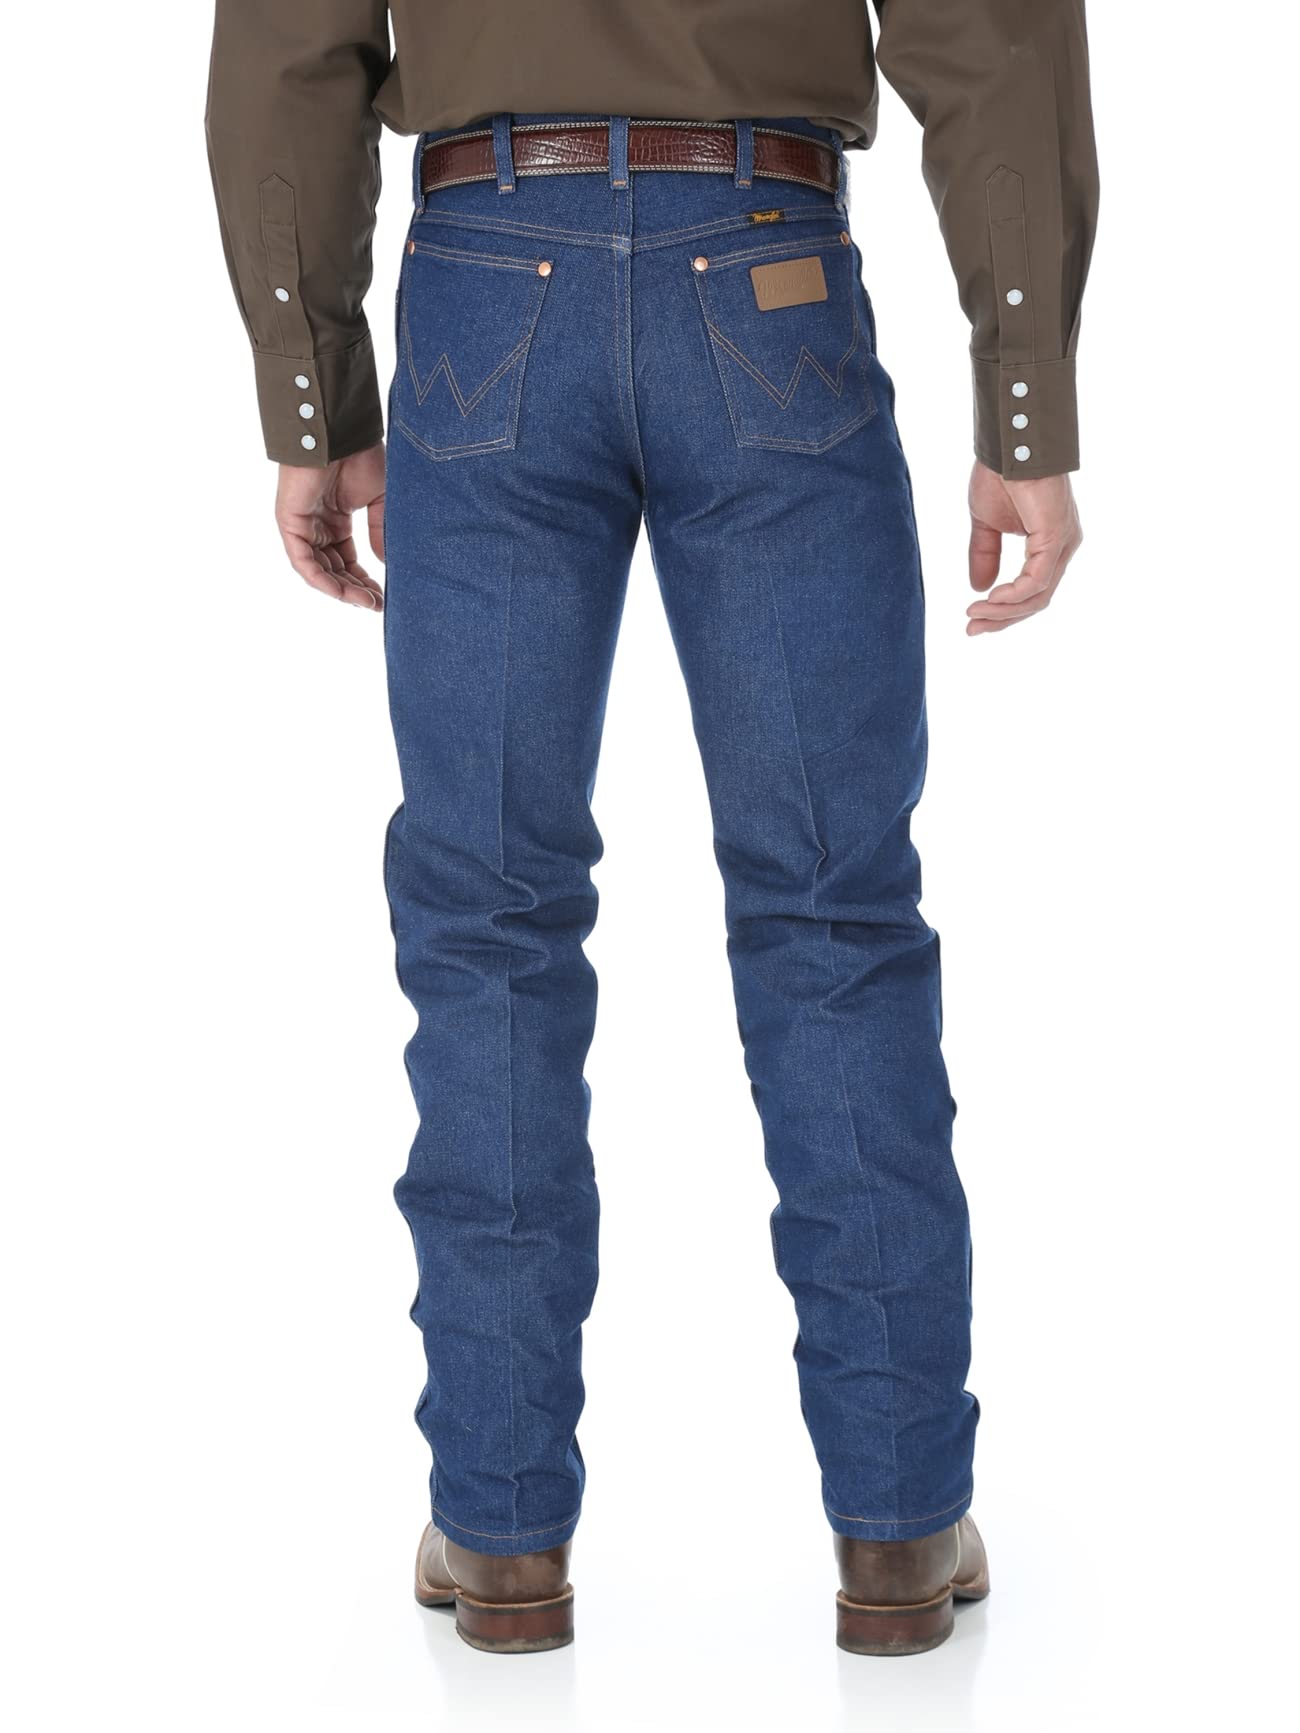 Wrangler Men’s 13MWZ Cowboy Cut Original Fit Jean